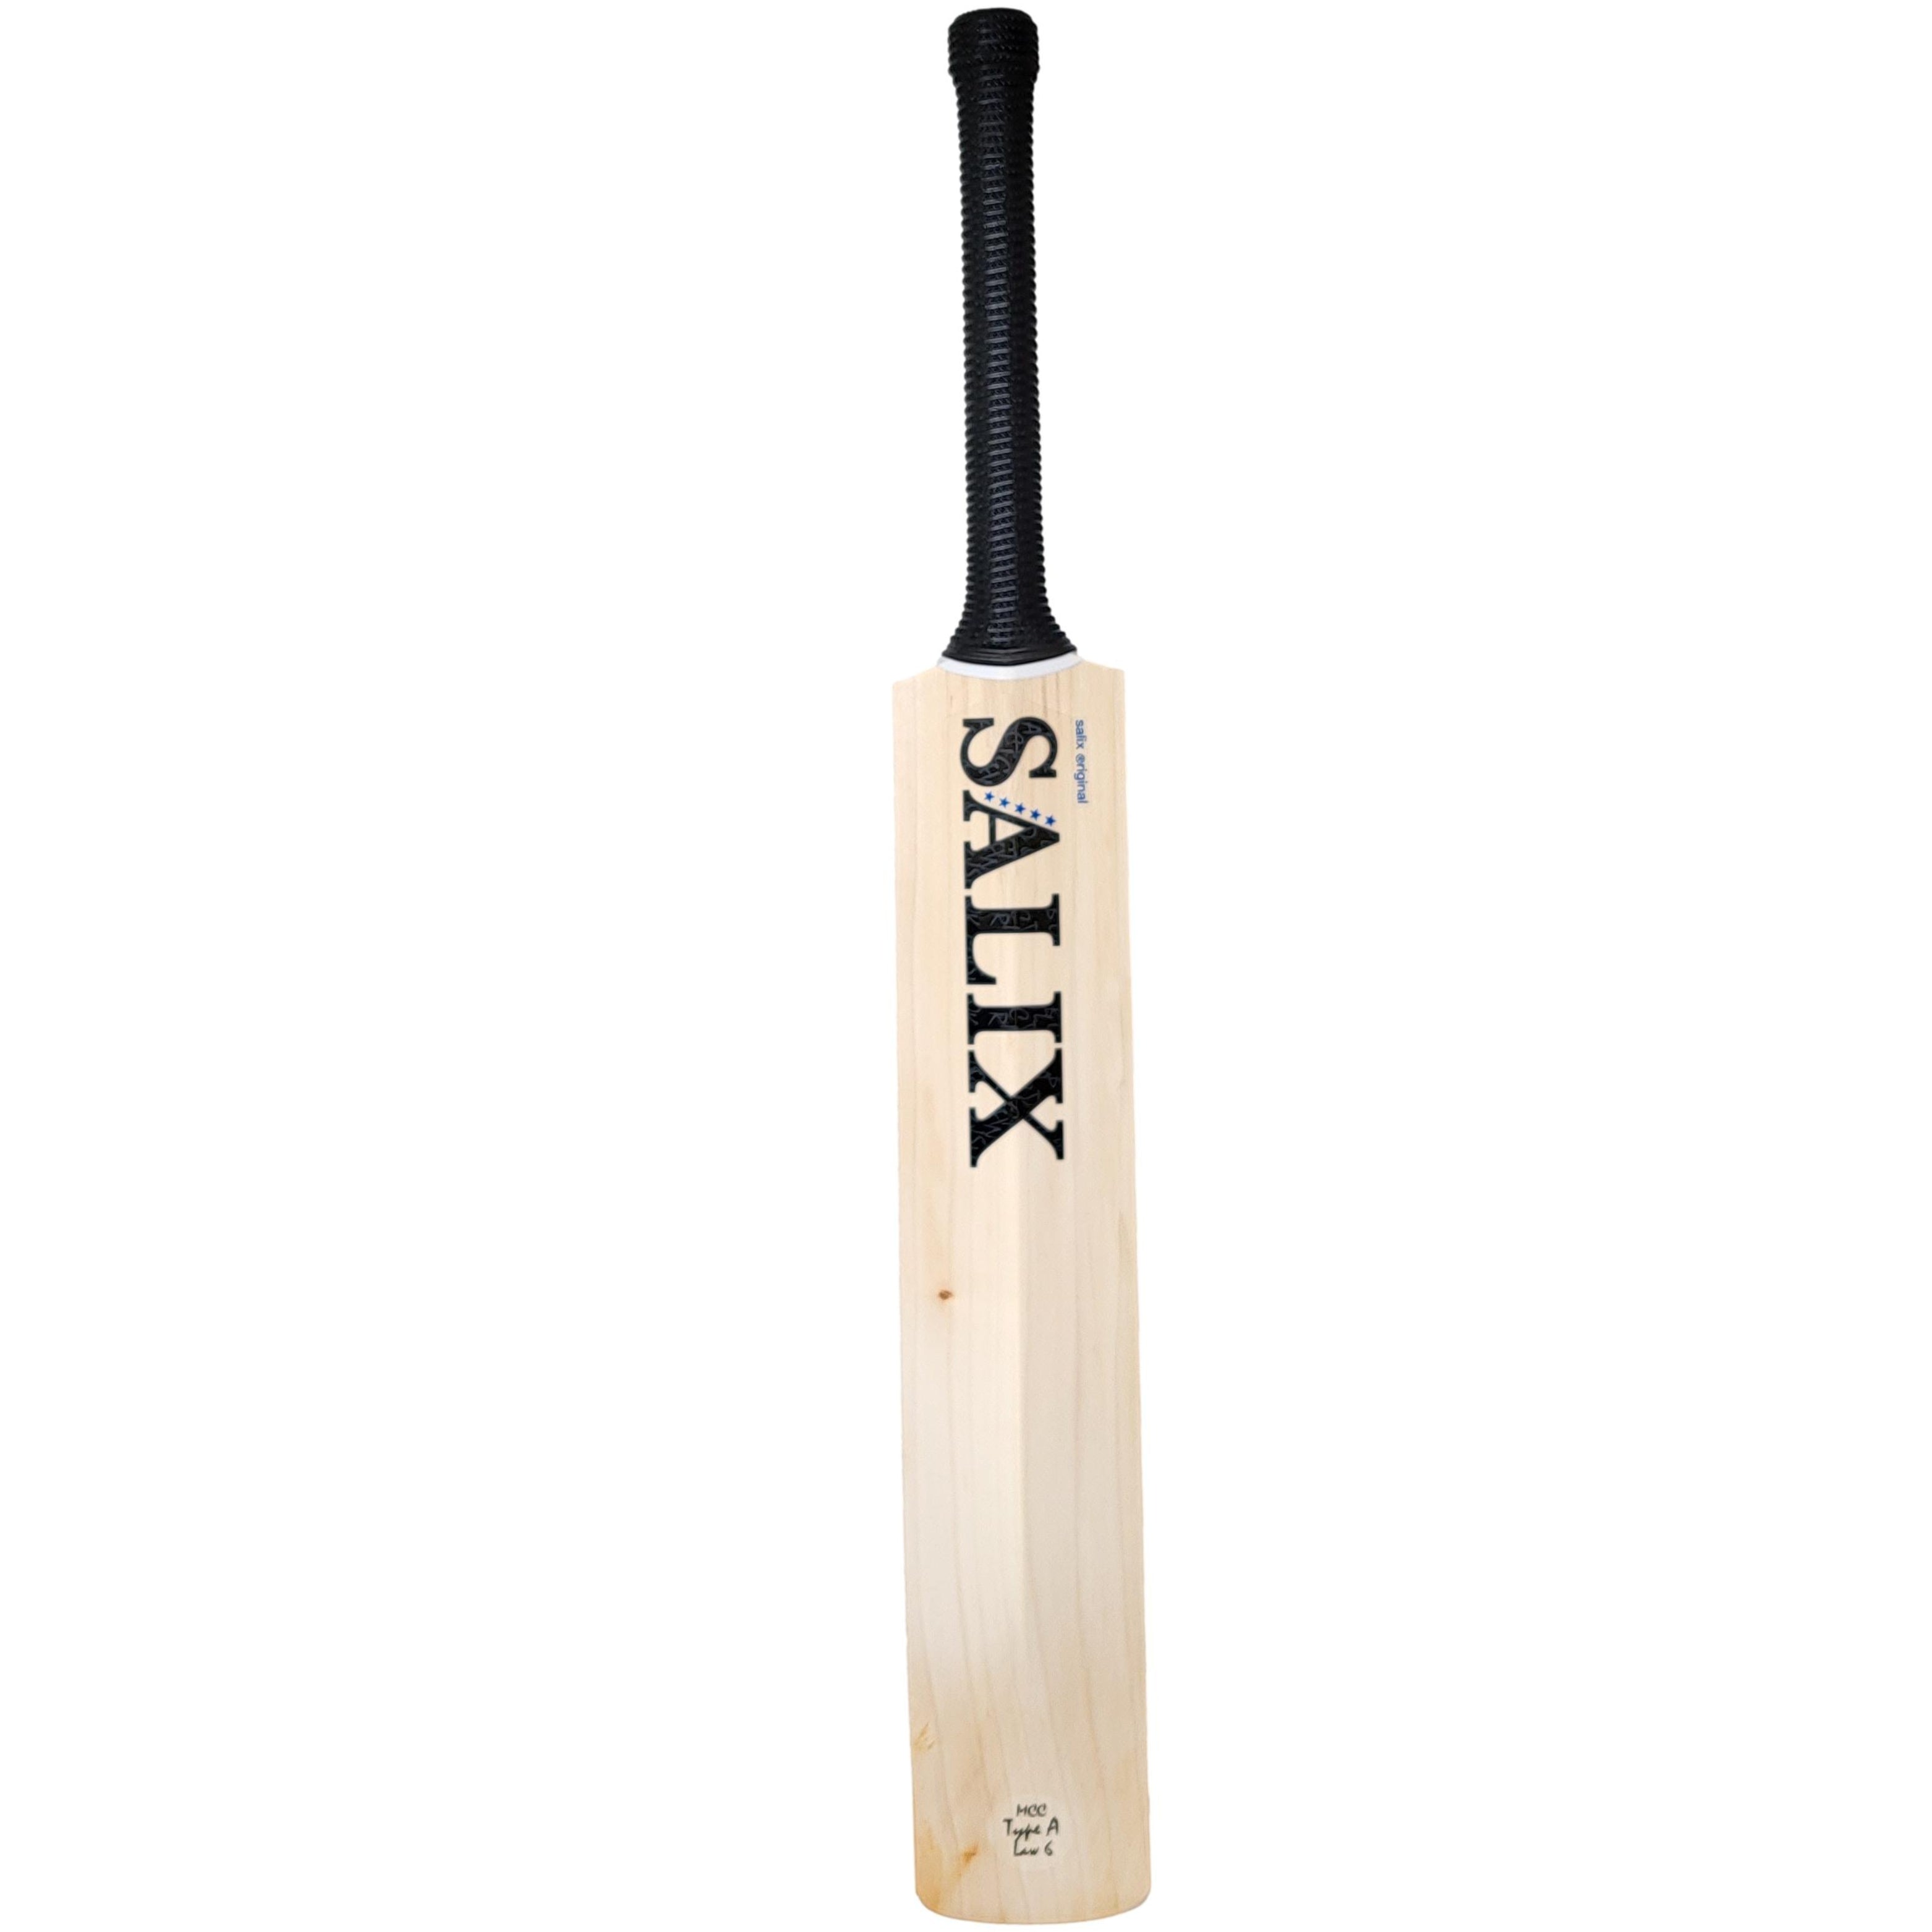 SALIX RAW English Willow Cricket Bat, SH